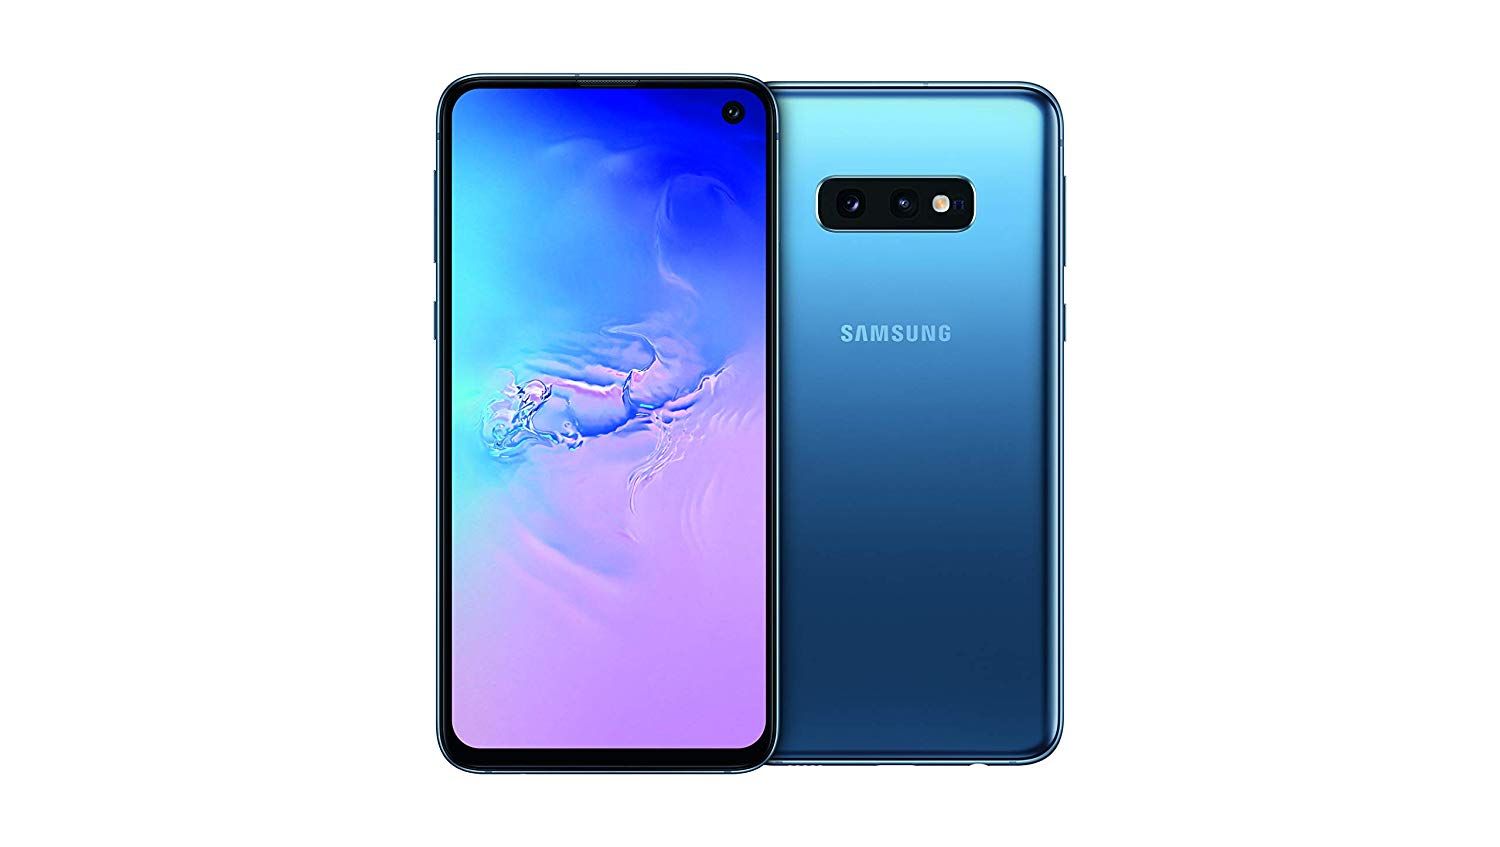 Samsung SM-G973F/DS Galaxy S10 128GB (Dual Sim) Prism Blue